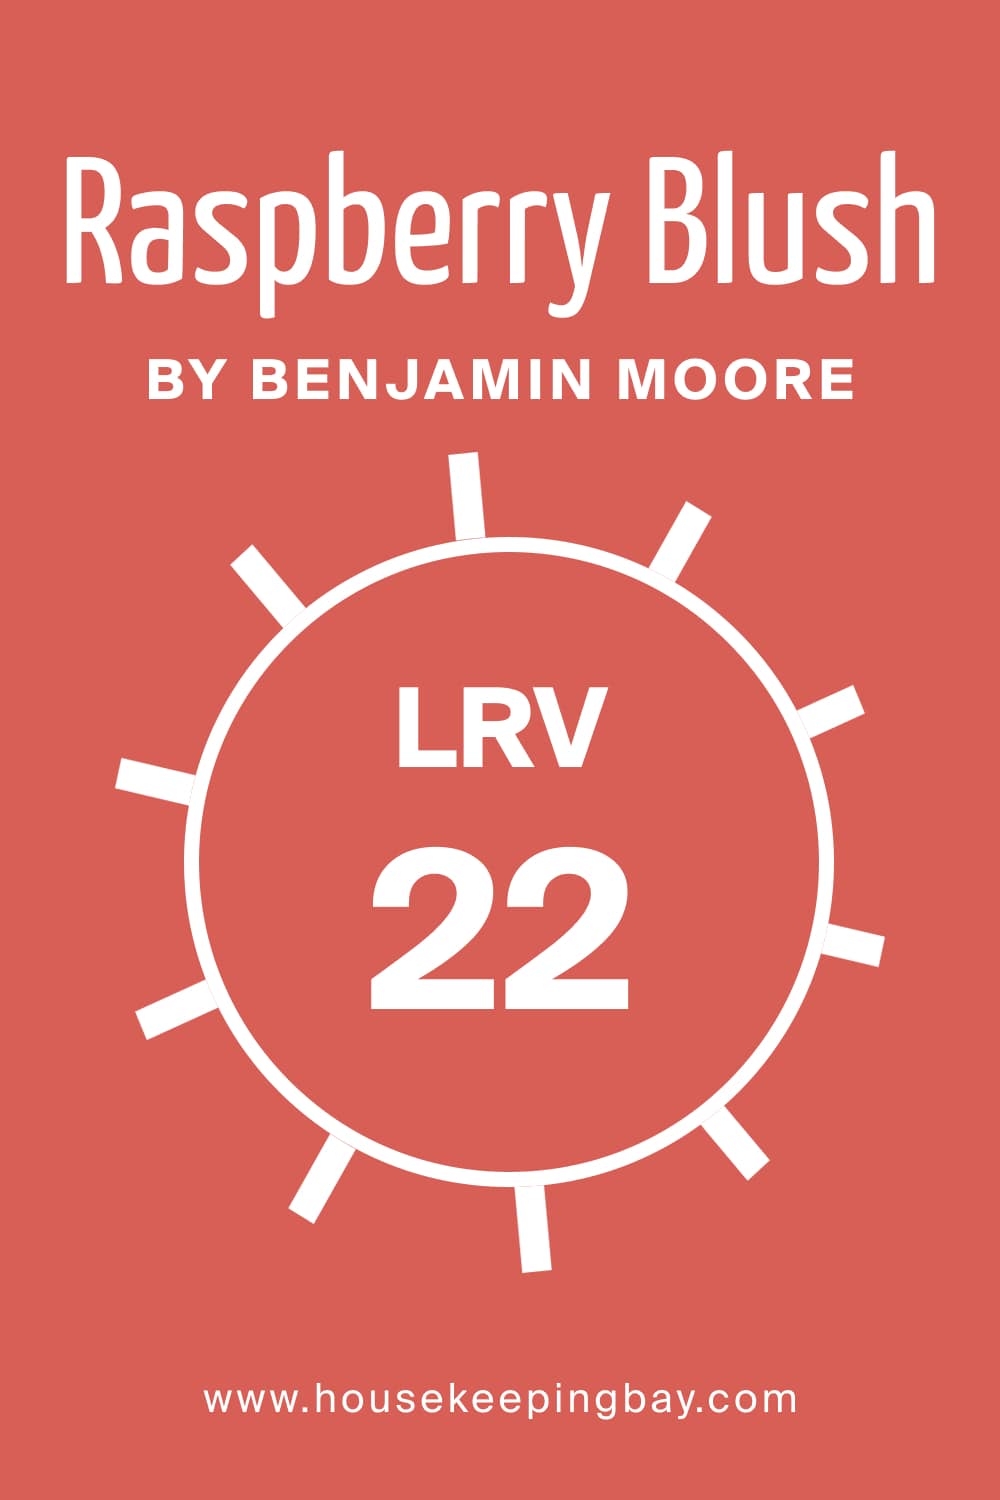 Raspberry Blush 2008 30 by Benjamin Moore. LRV – 22